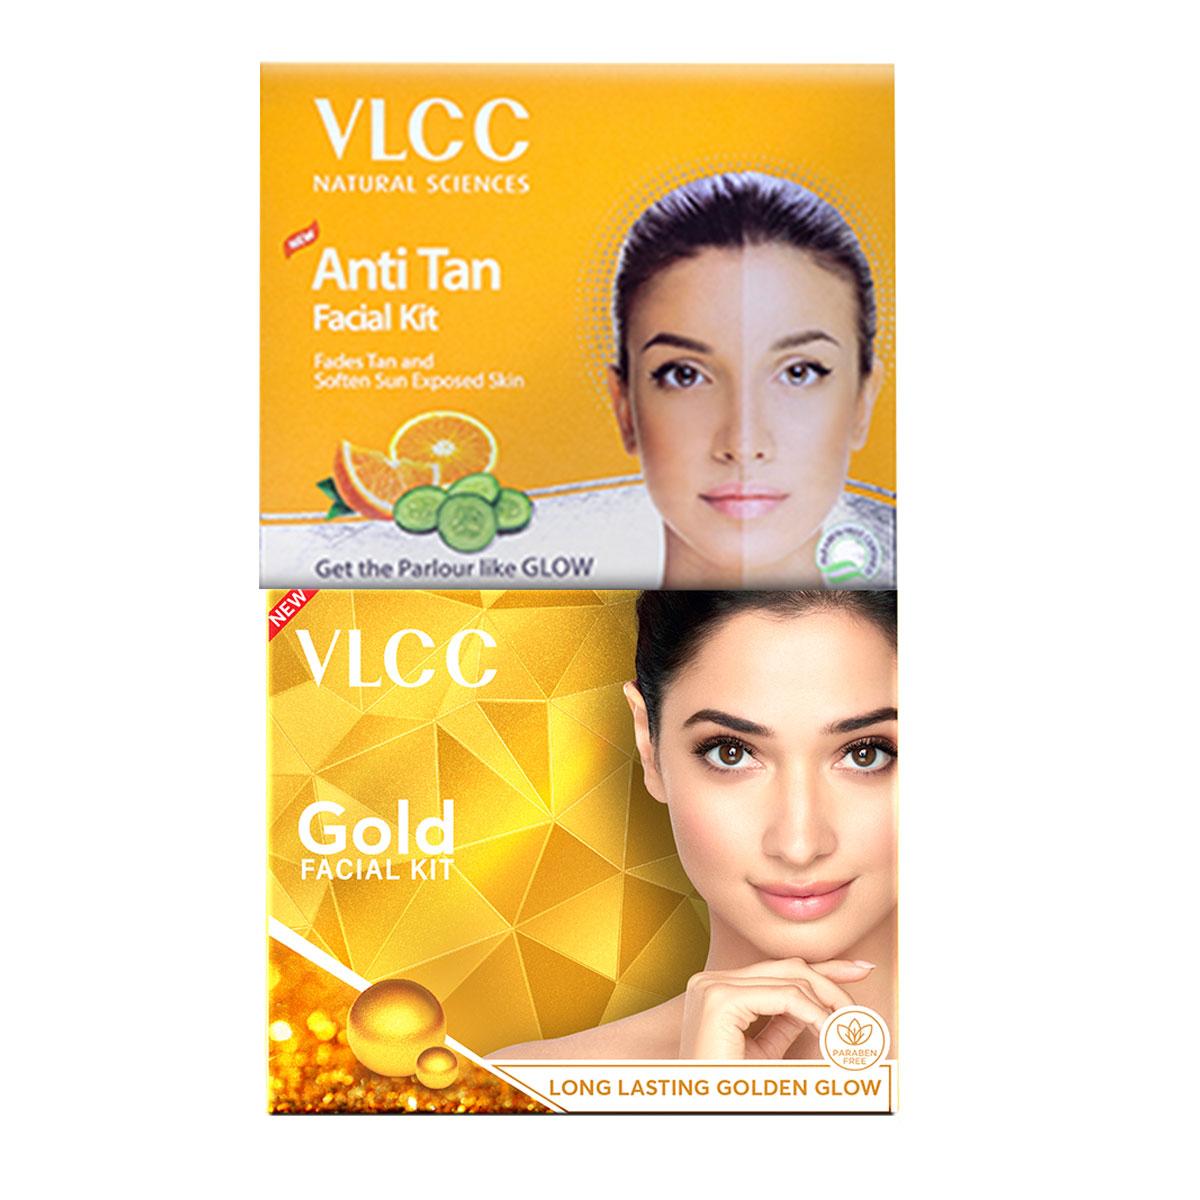 VLCC Gold Facial Kit & Anti Tan Single Facial Kit